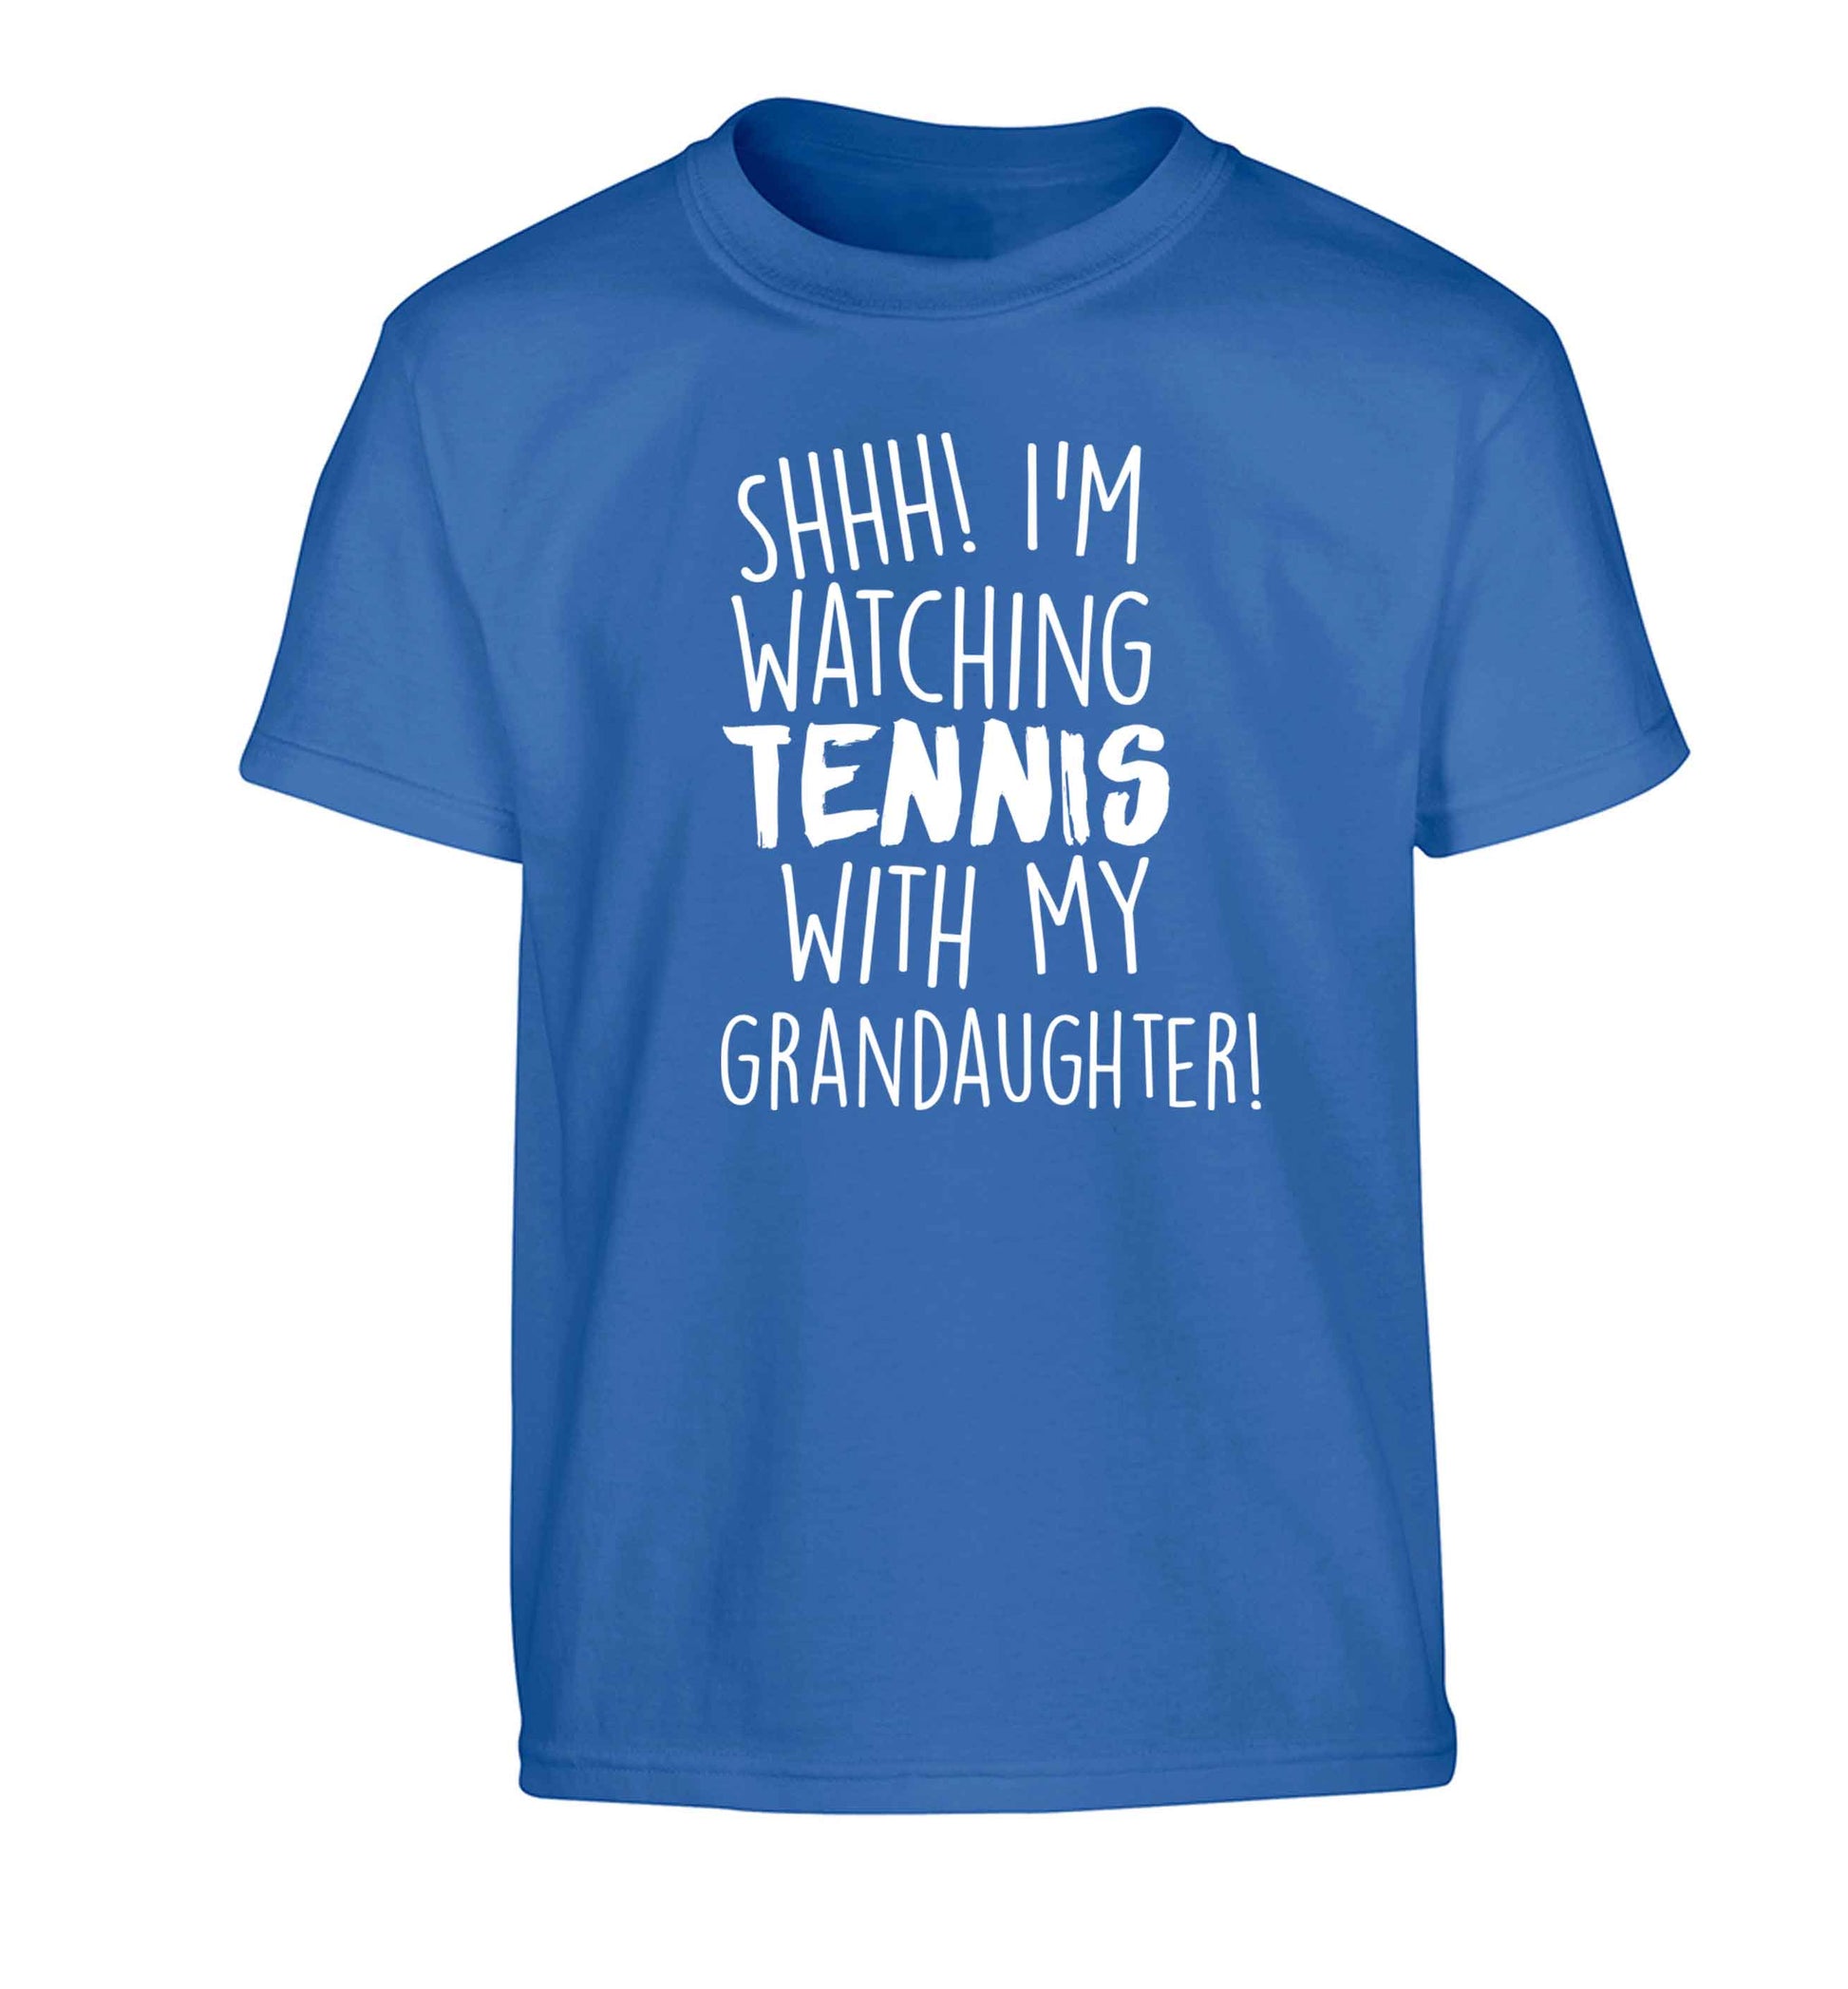 Shh! I'm watching tennis with my granddaughter! Children's blue Tshirt 12-13 Years